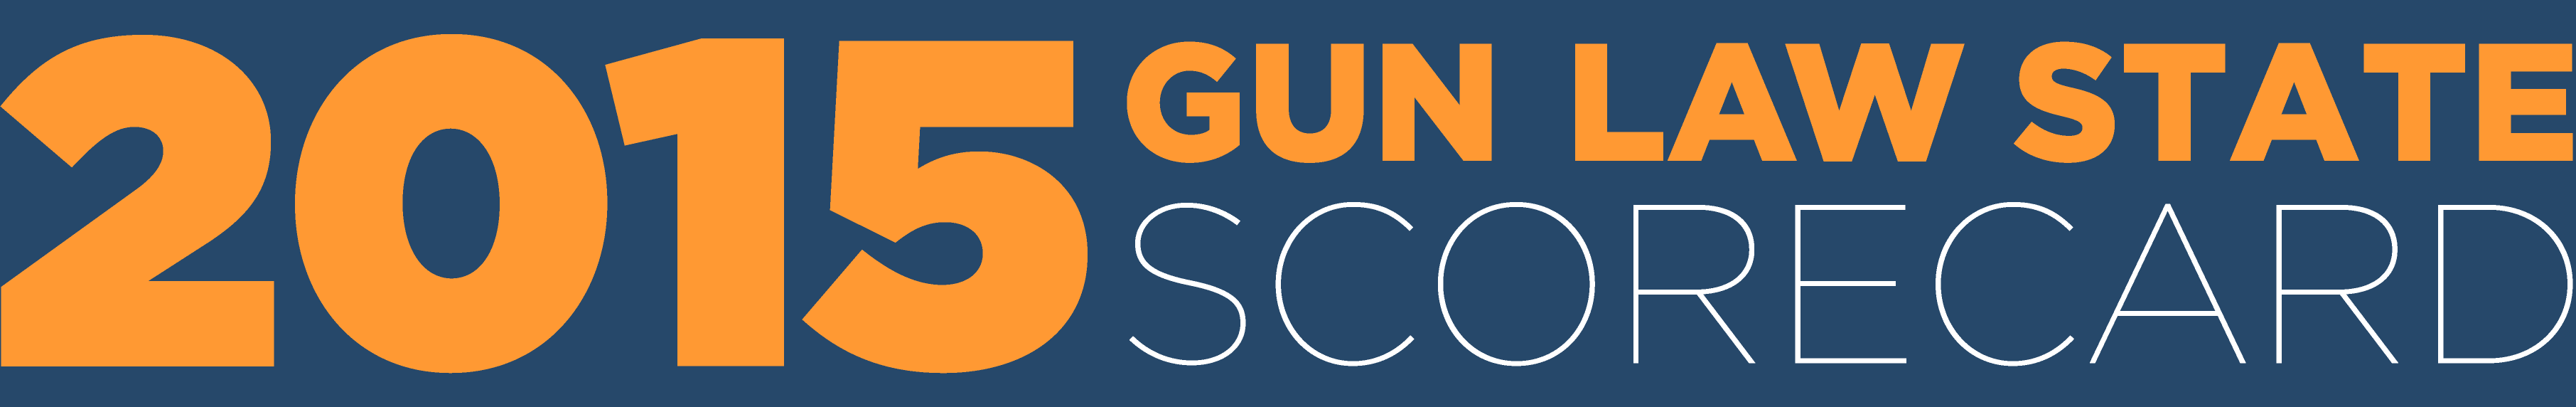 Gun Law State Scorecard 2015